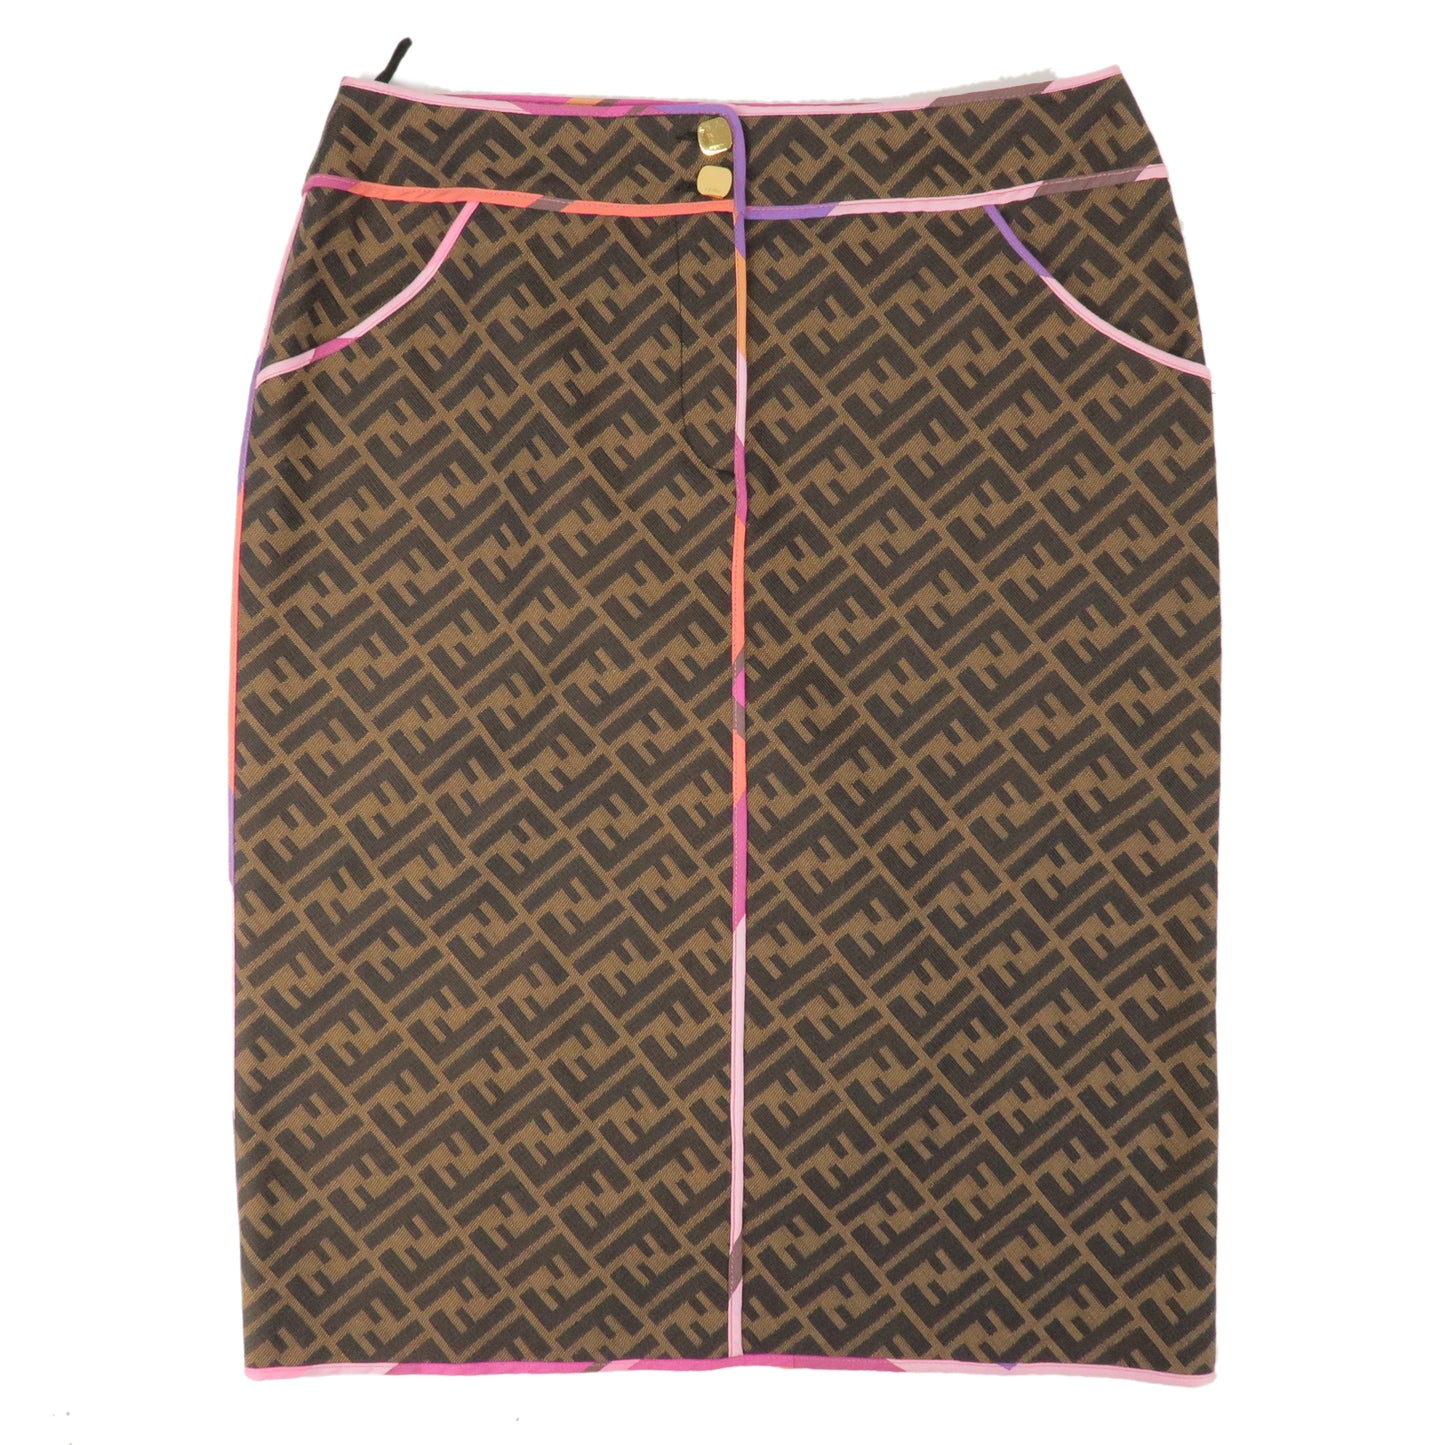 FENDI Zucca Tight Skirt Size 30 Khaki Black Multicolored